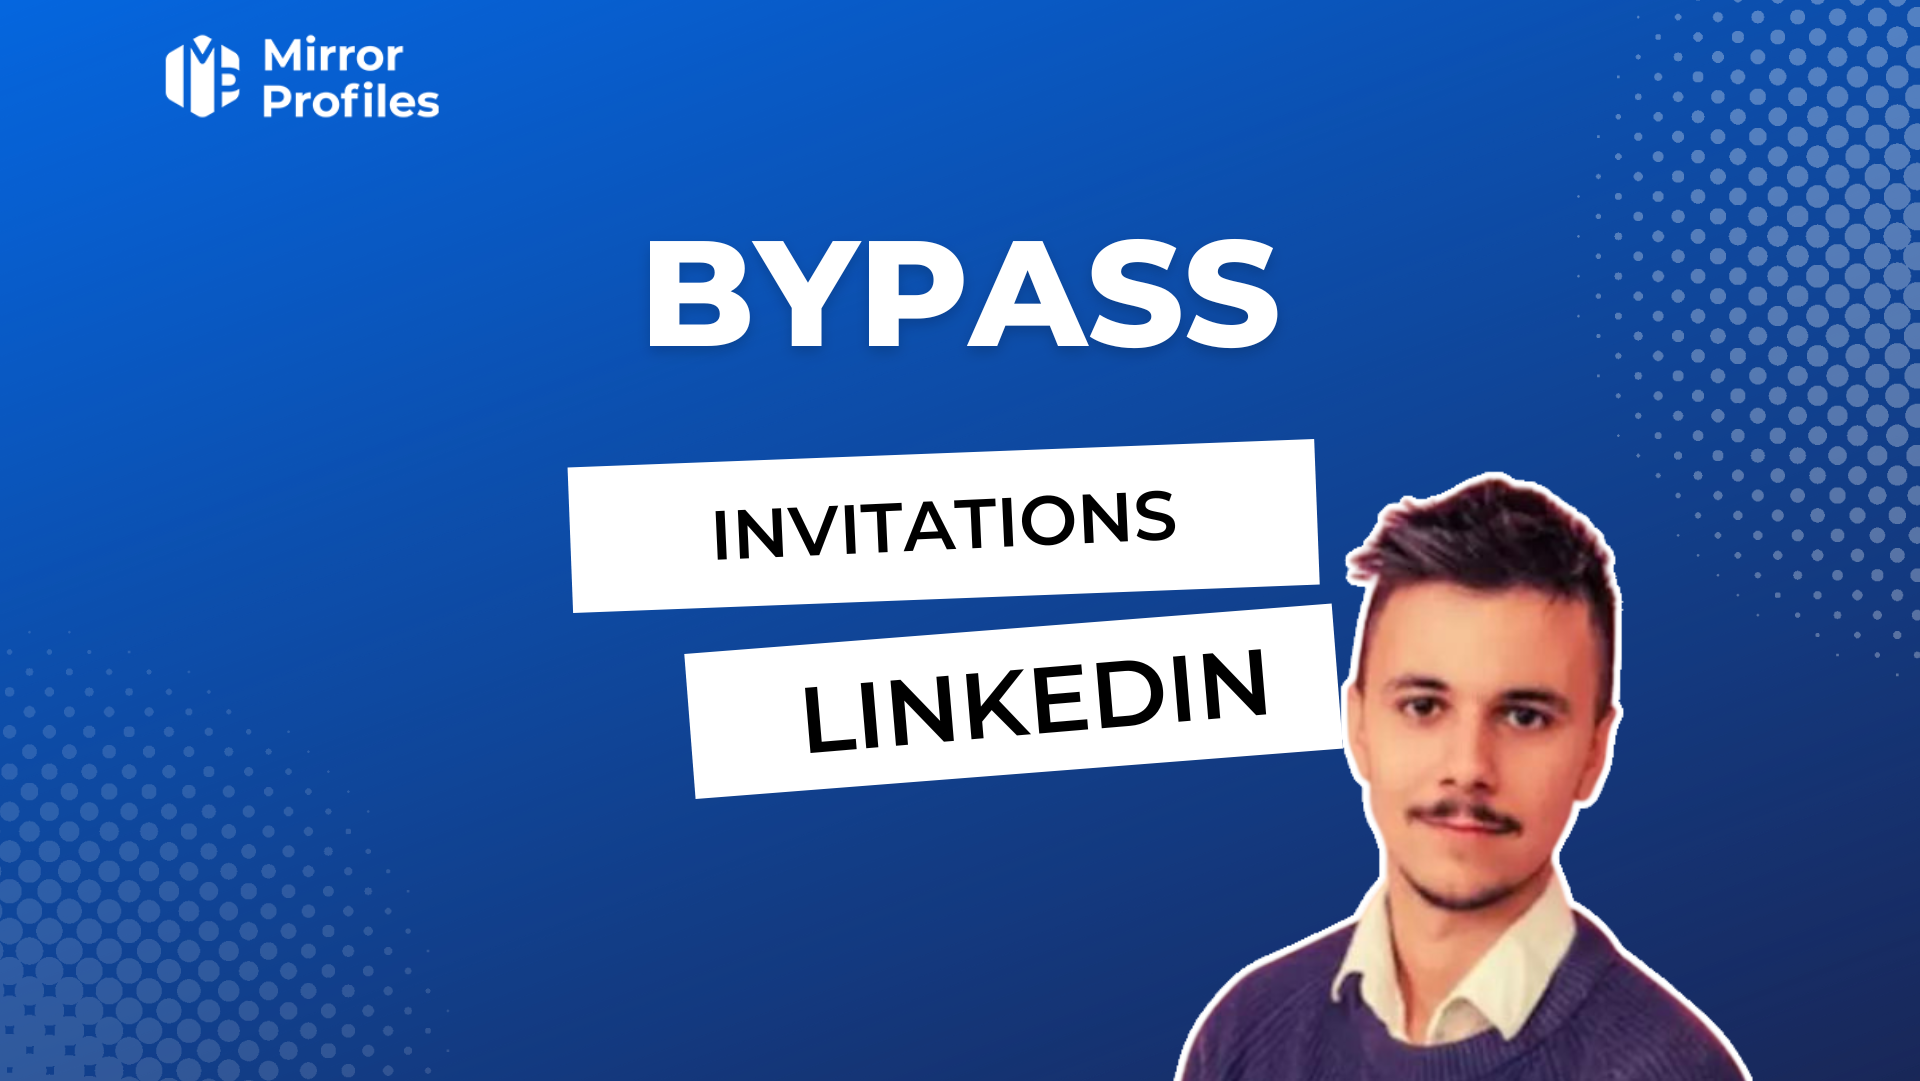 Bypass invitations linkedin.